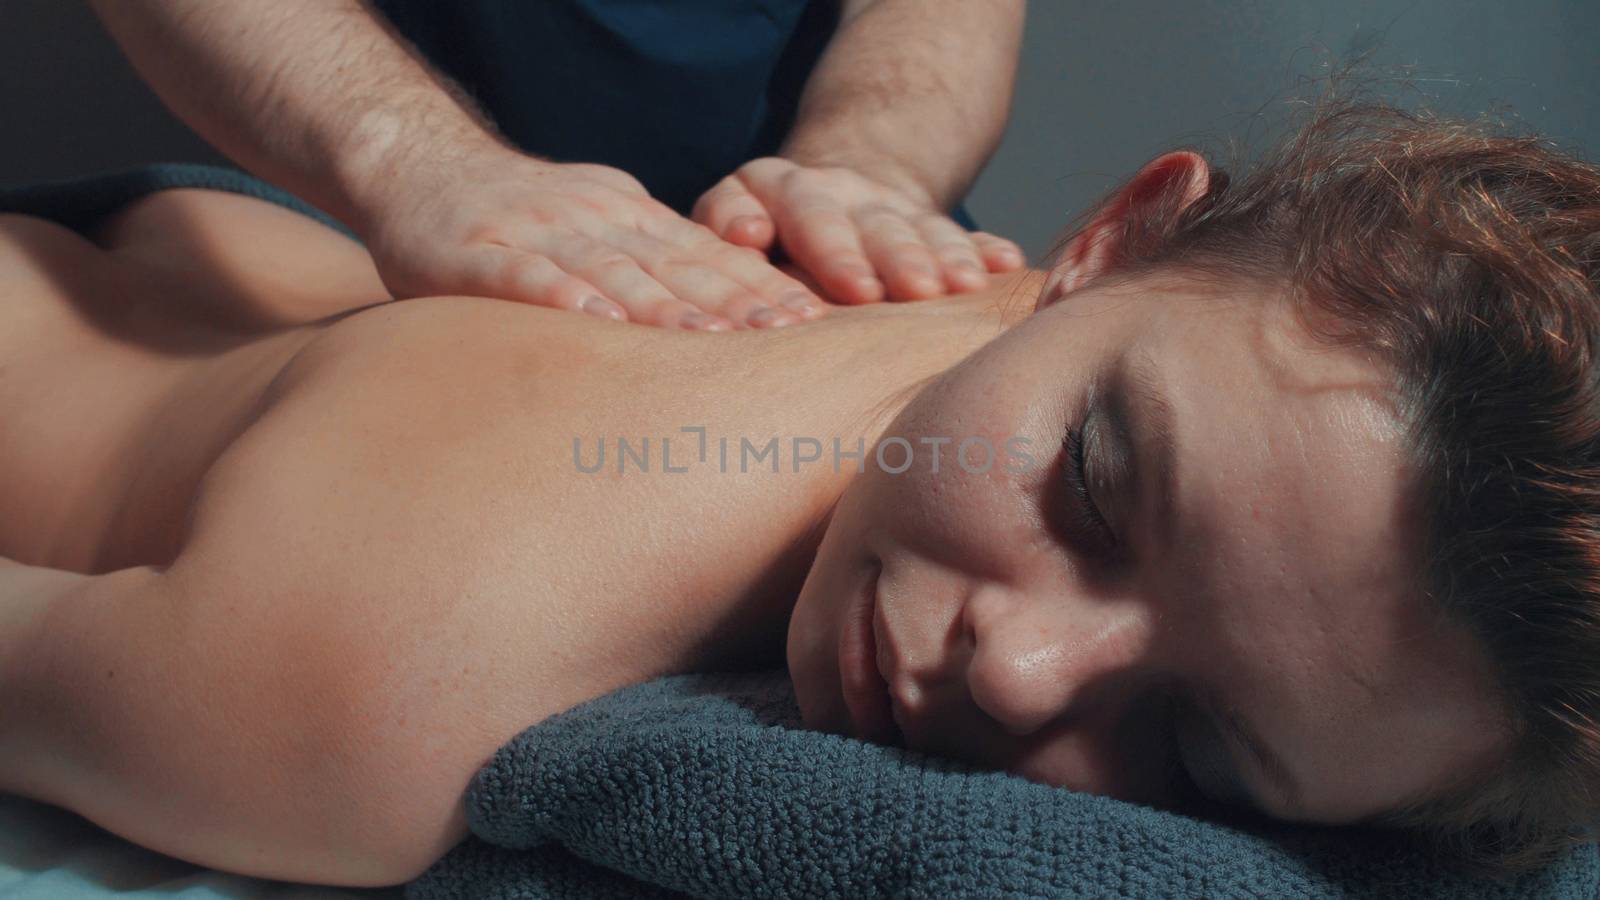 Man's hands massaging woman's back by Chudakov